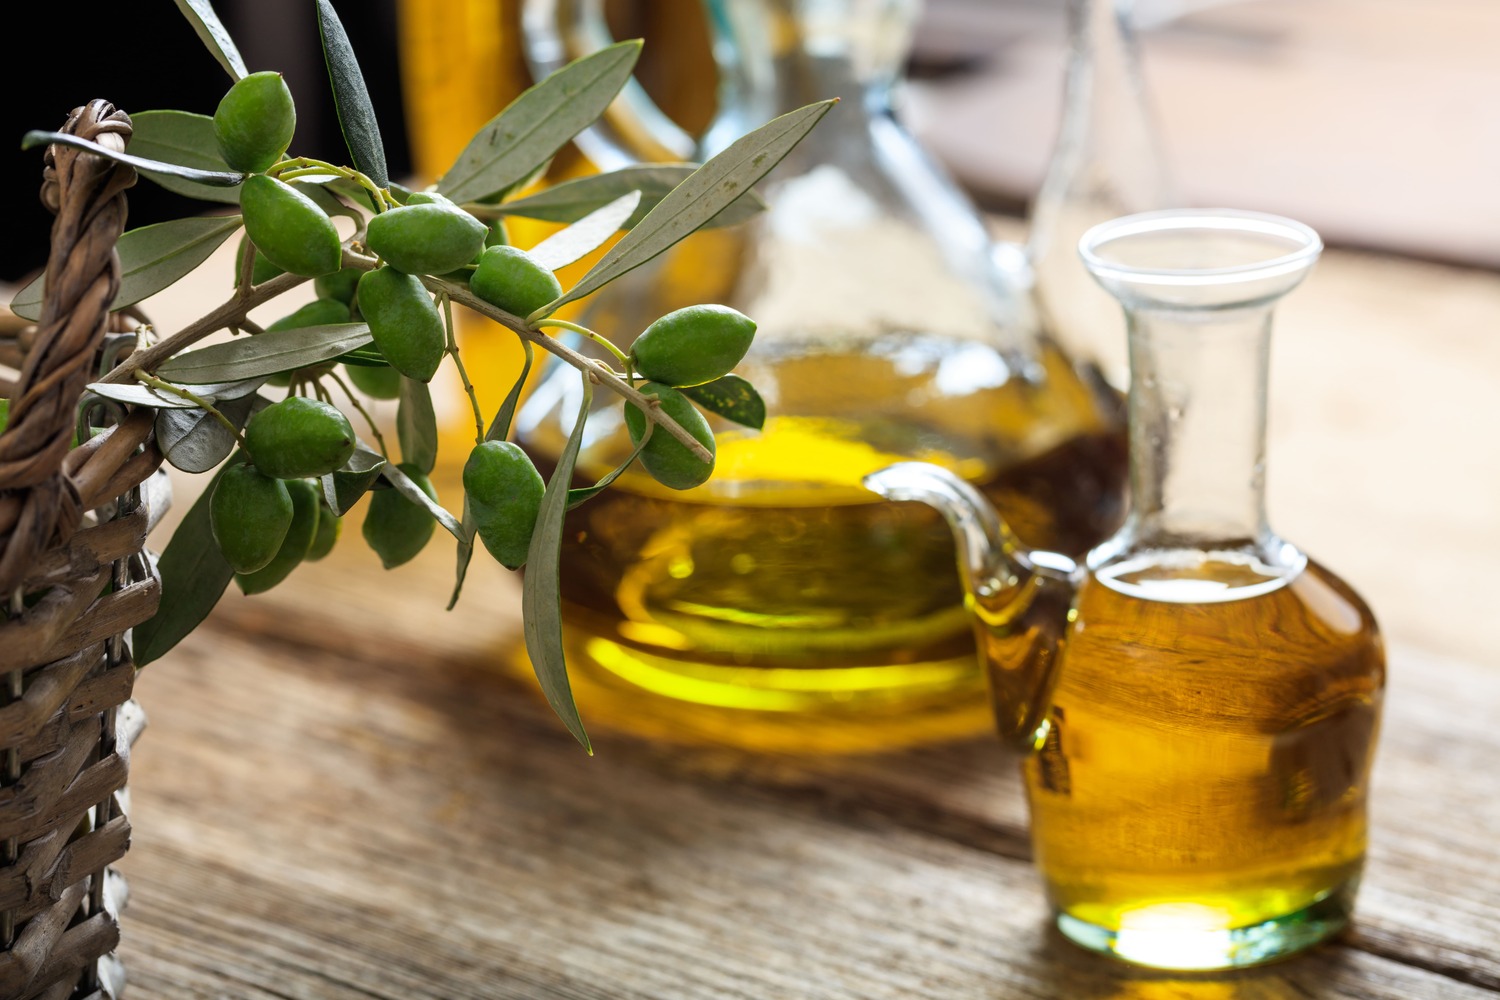 olive-oil-and-olive-twig-on-a-table-2021-08-26-16-34-05-utc-2-1.jpg